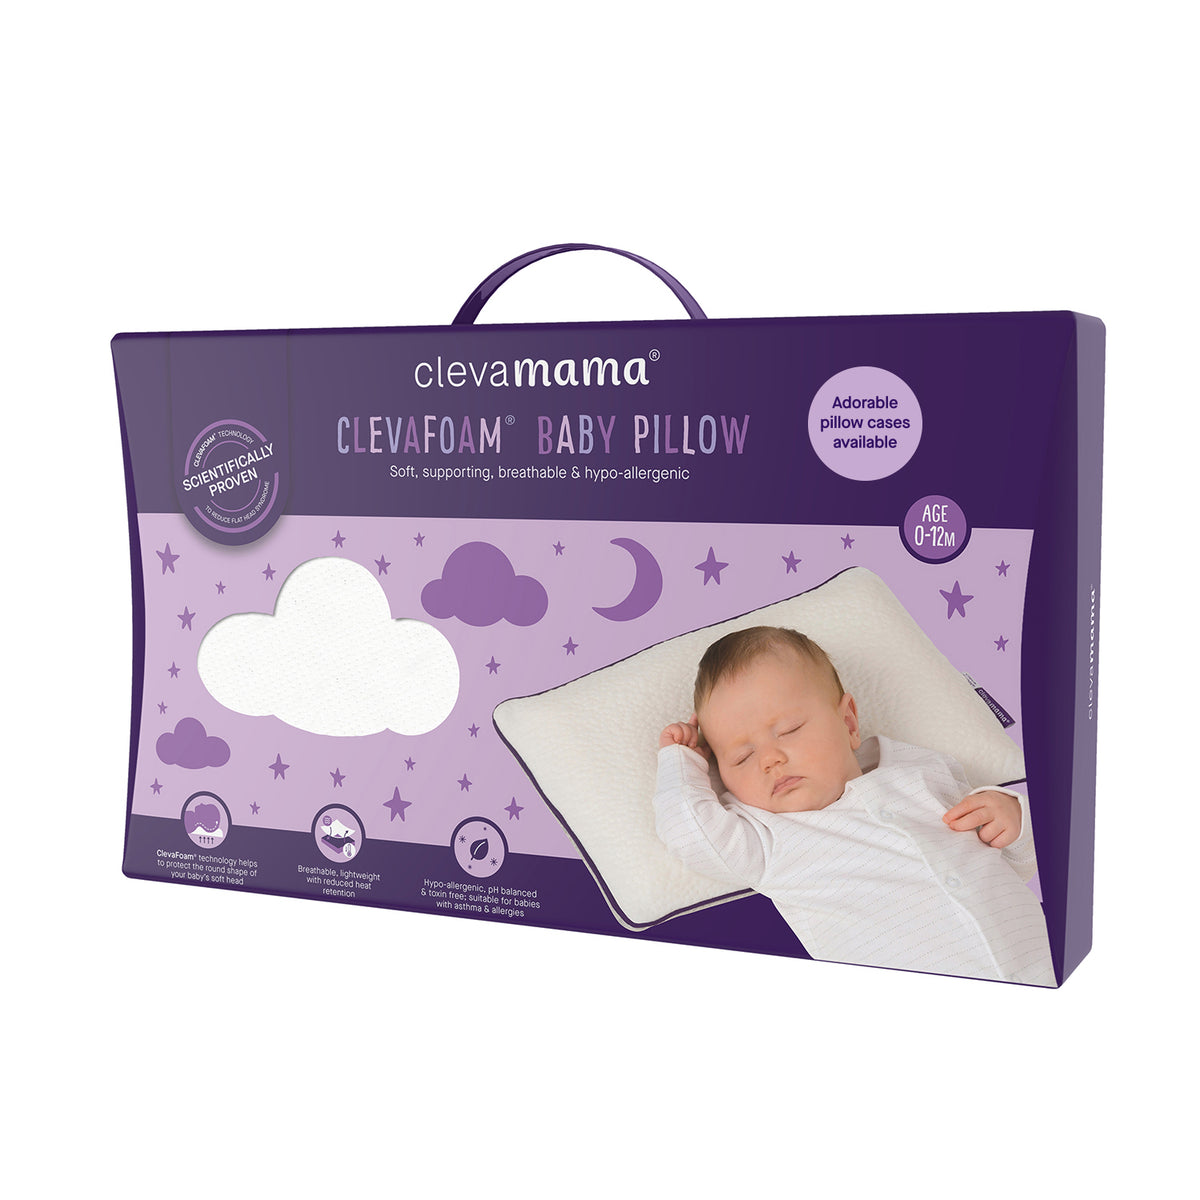 Clevamama ClevaFoam® Baby Pillow - Happy Baby